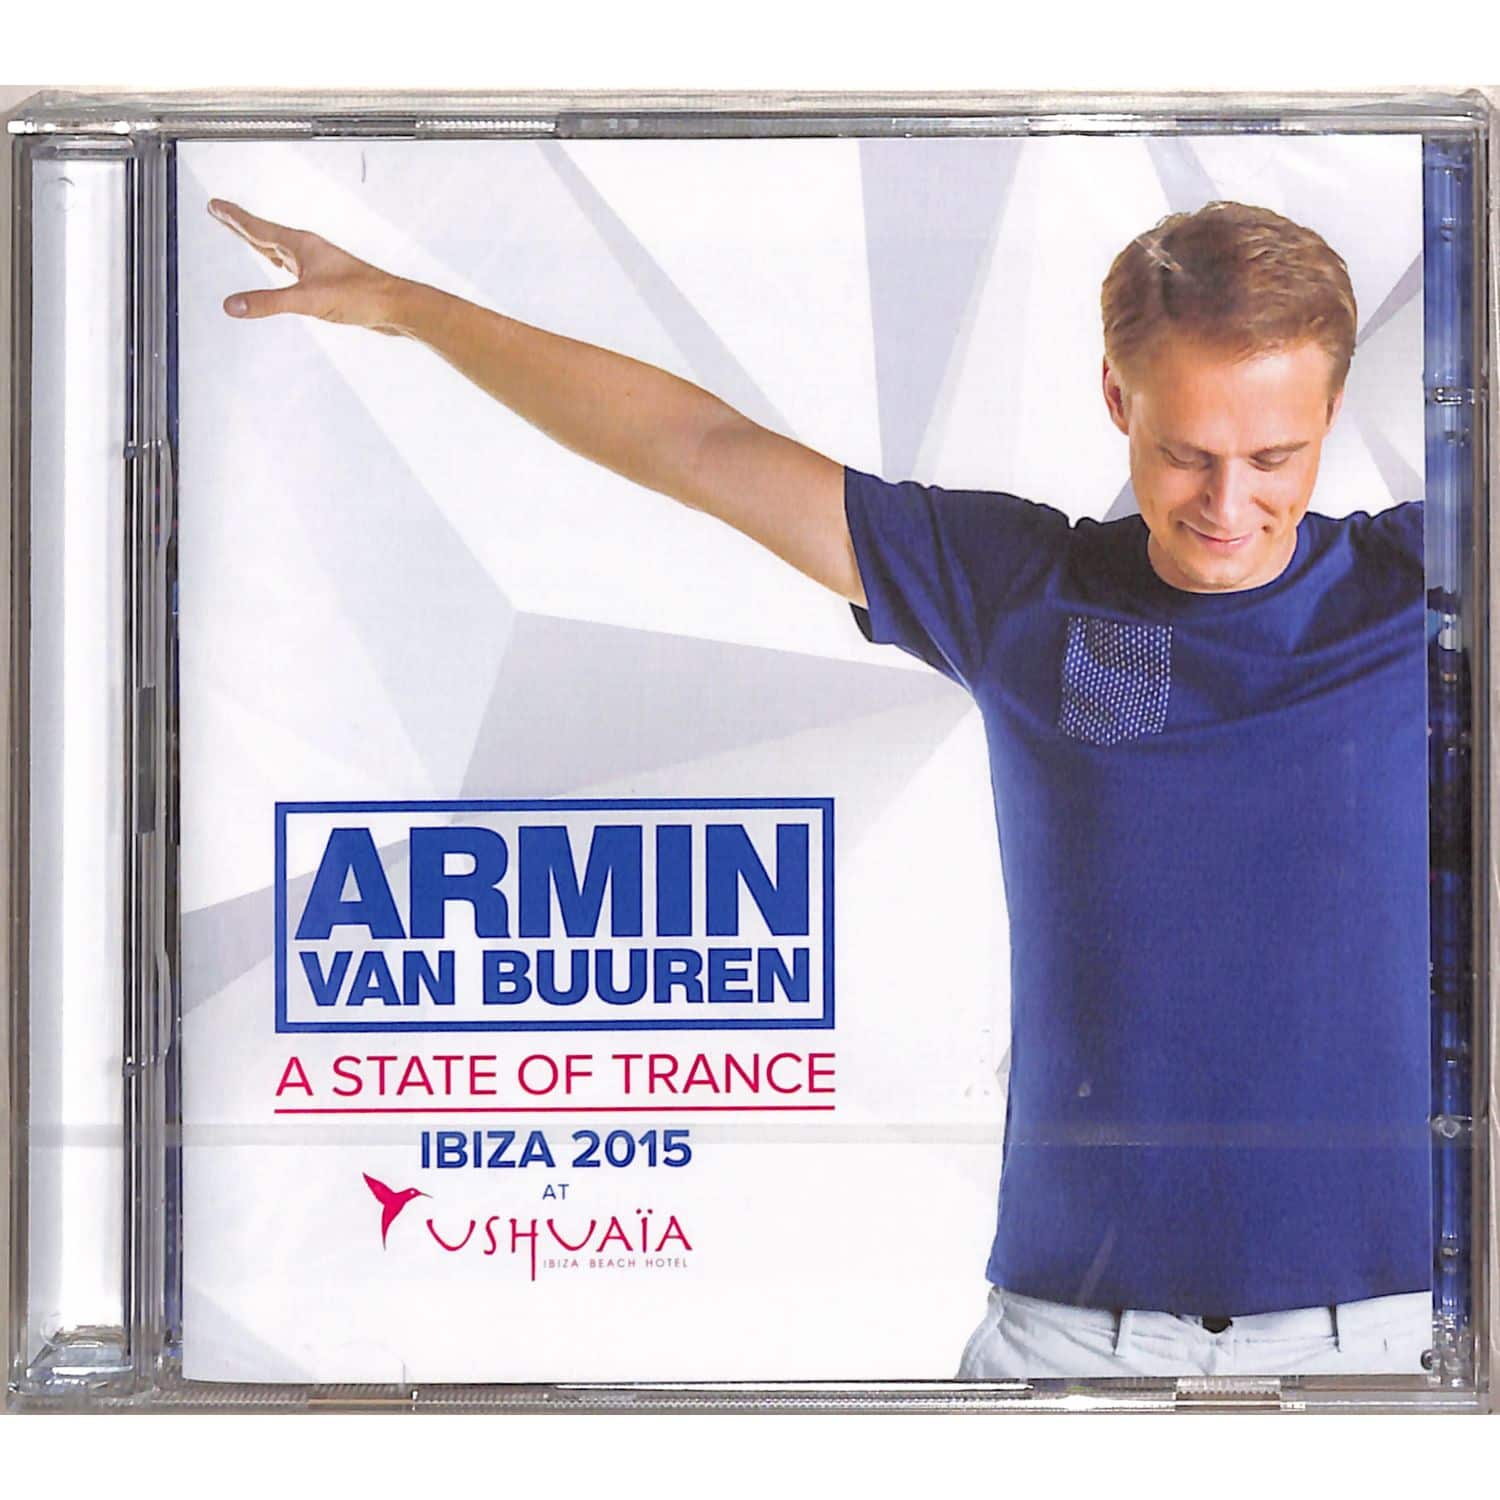 Armin Van Buuren - A STATE OF TRANCE - AT USHUAIA, IBIZA 2015 